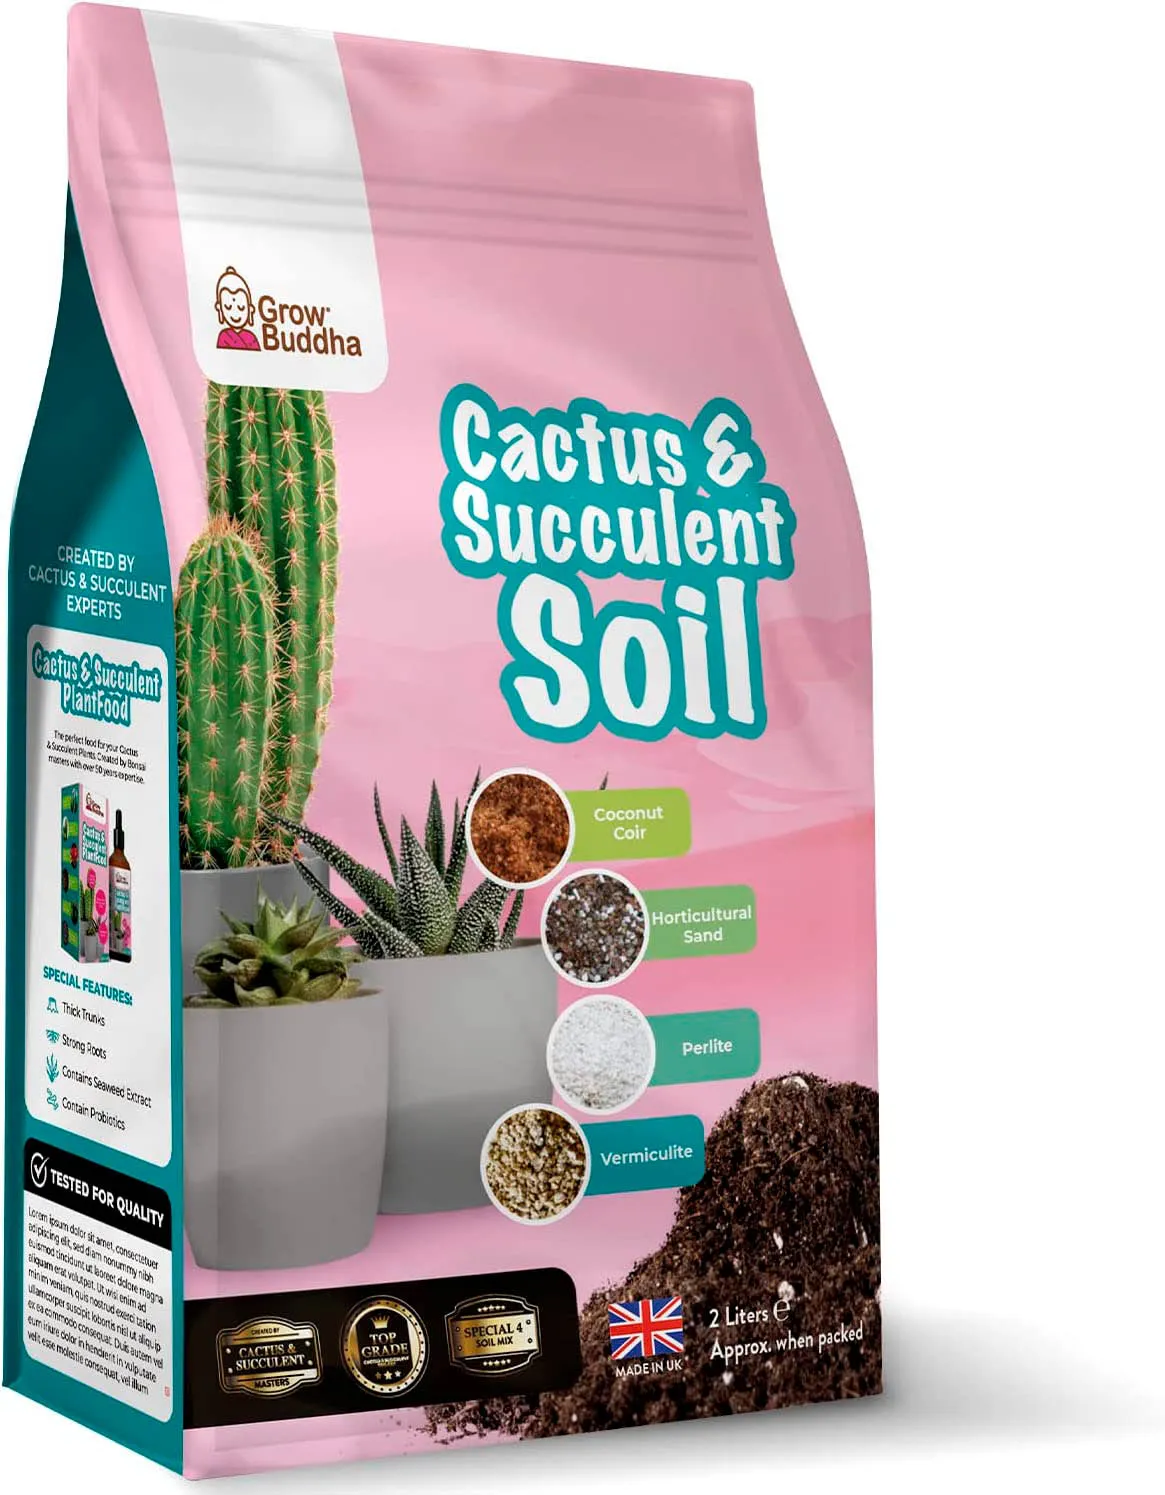 Buddha cactus and succulent soil